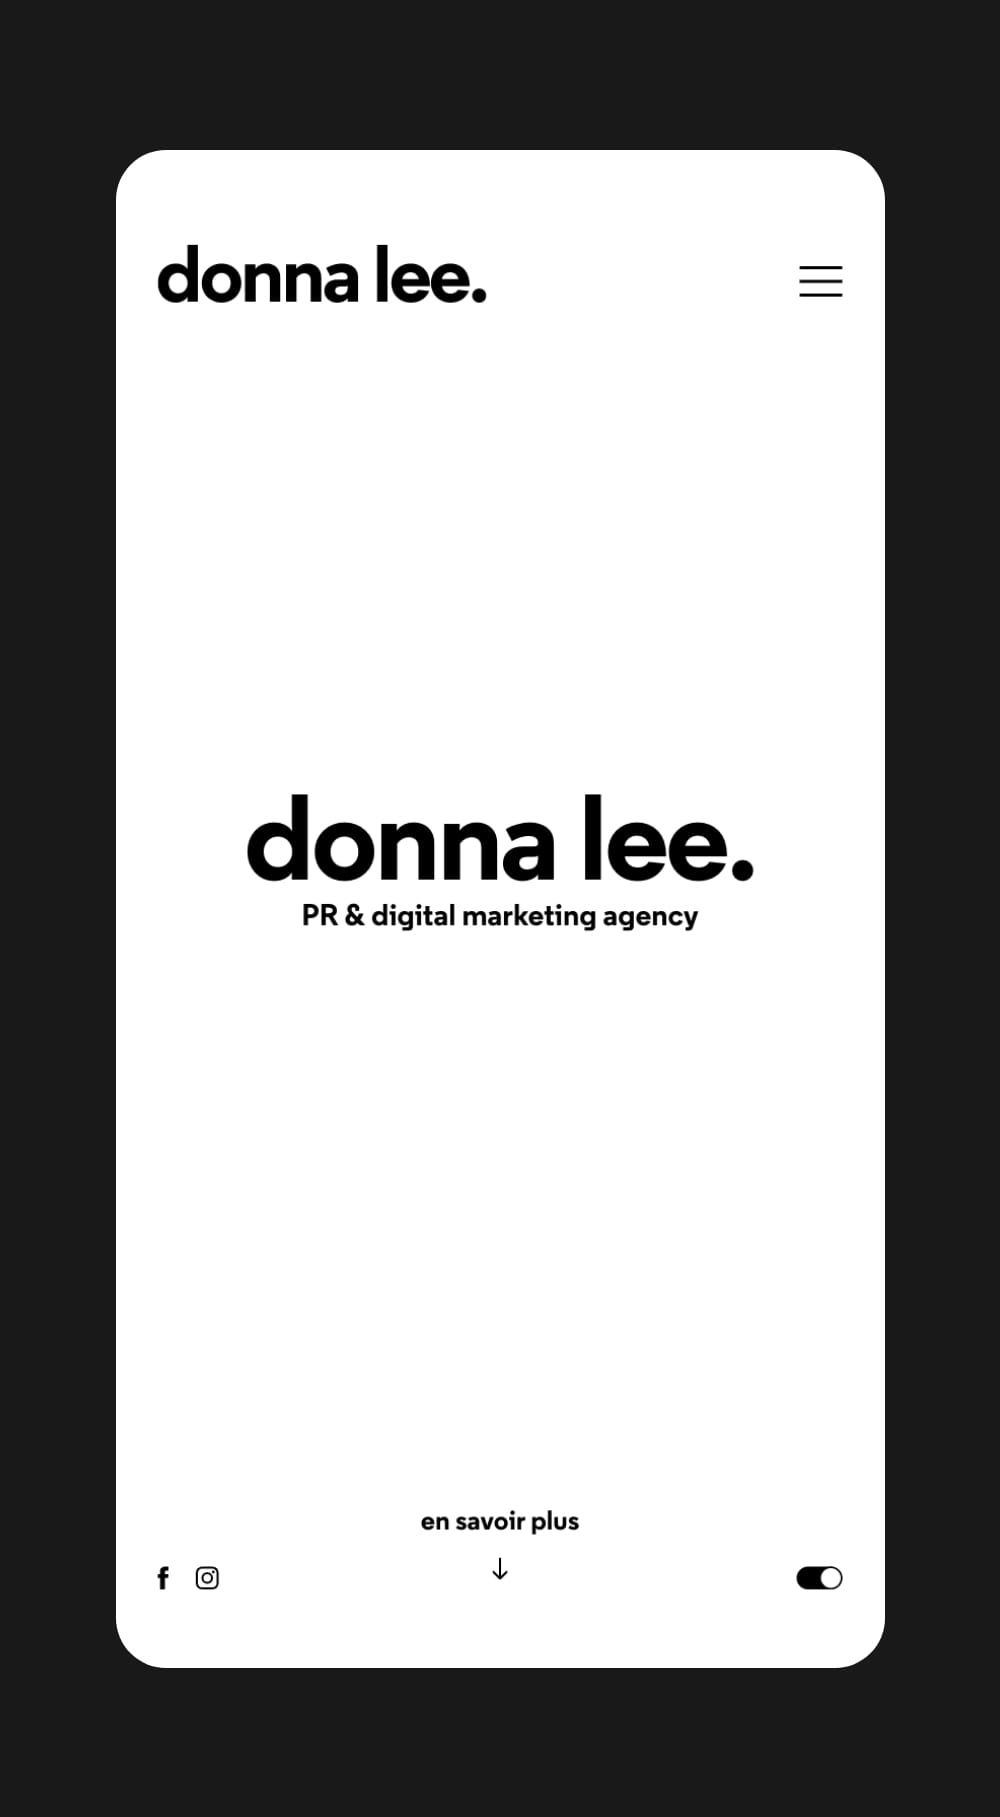 idizbox - digital & print - Donna Lee